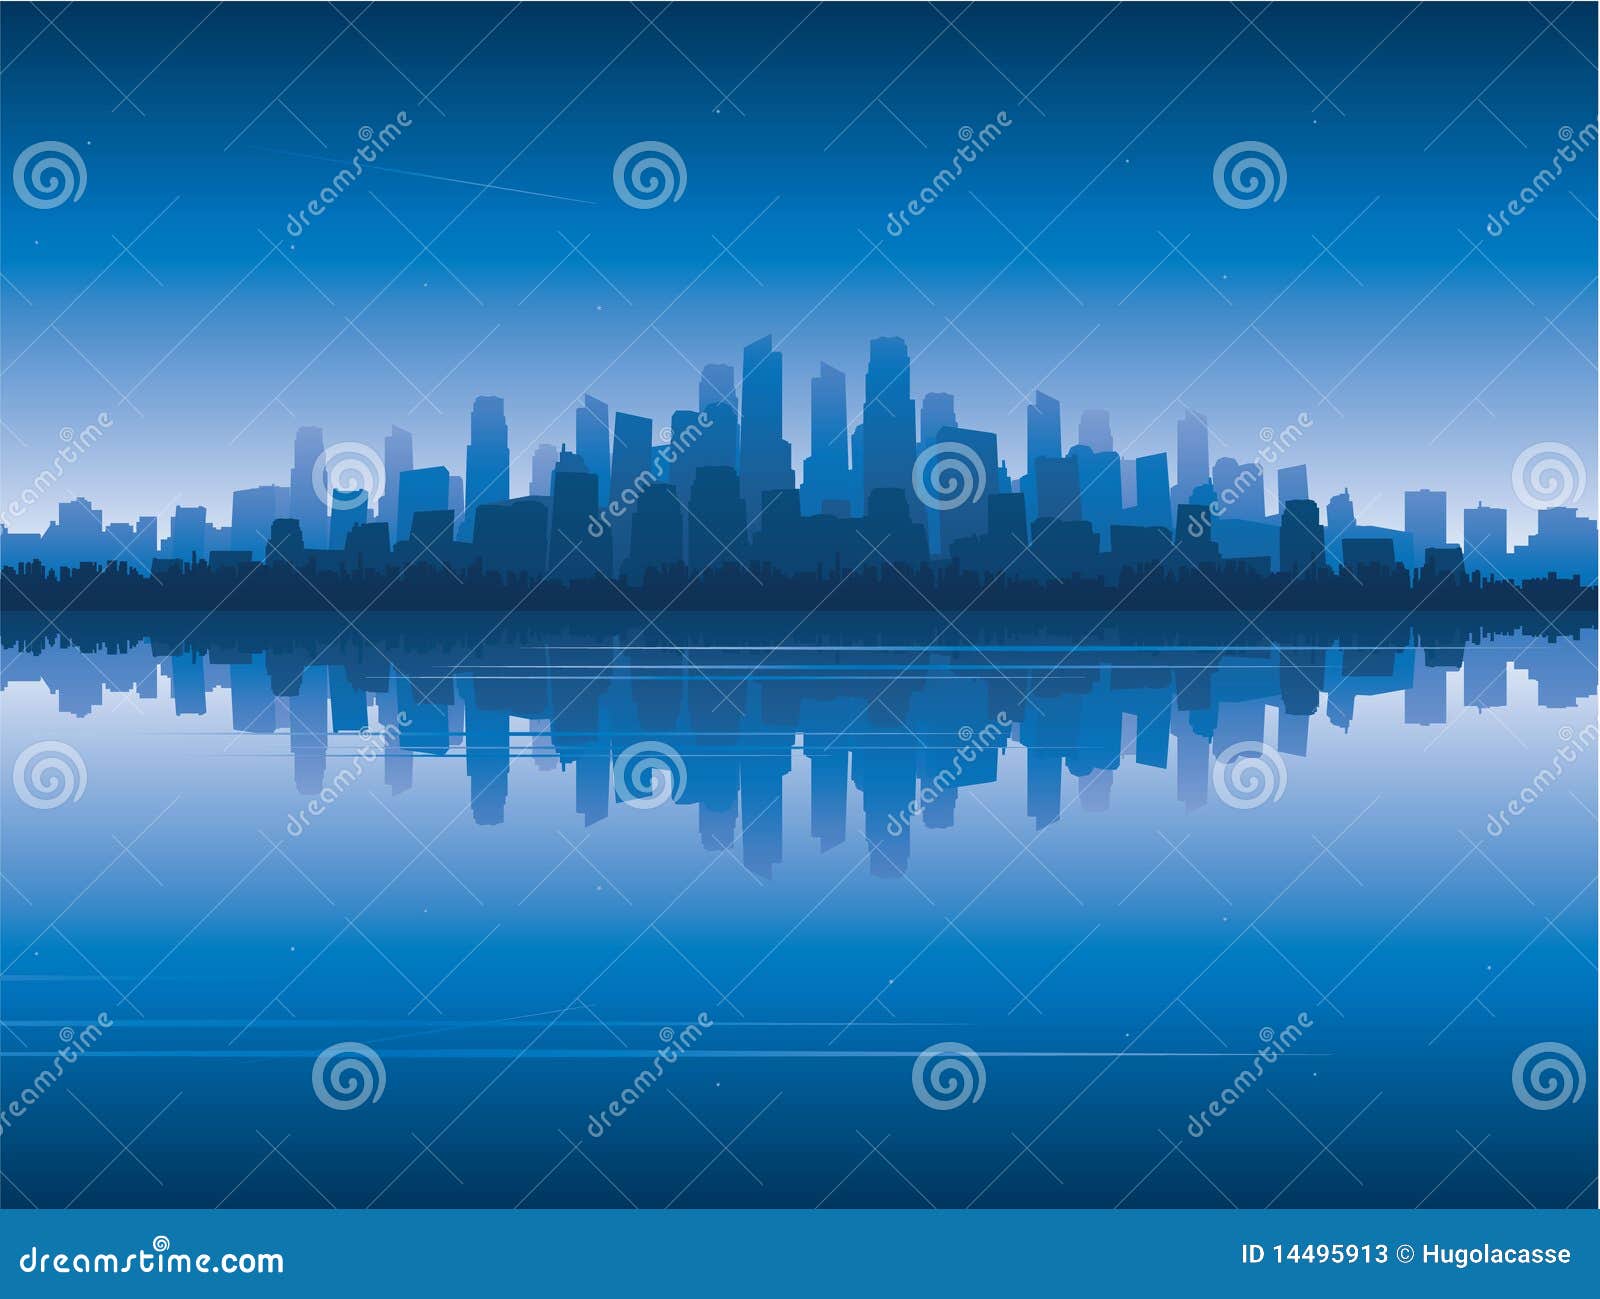 city skyline reflect on water